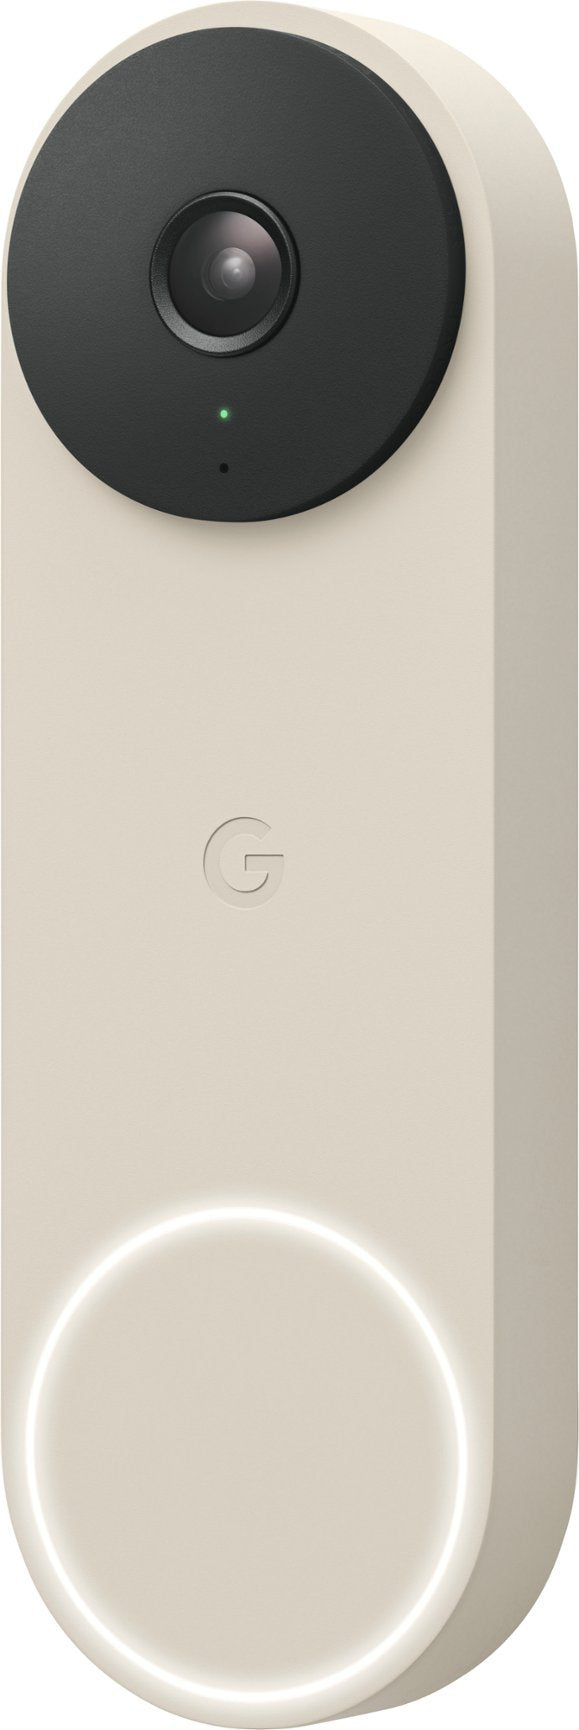 Google Nest Doorbell Wired (2nd Generation) - Linen (Certified Refurbished)